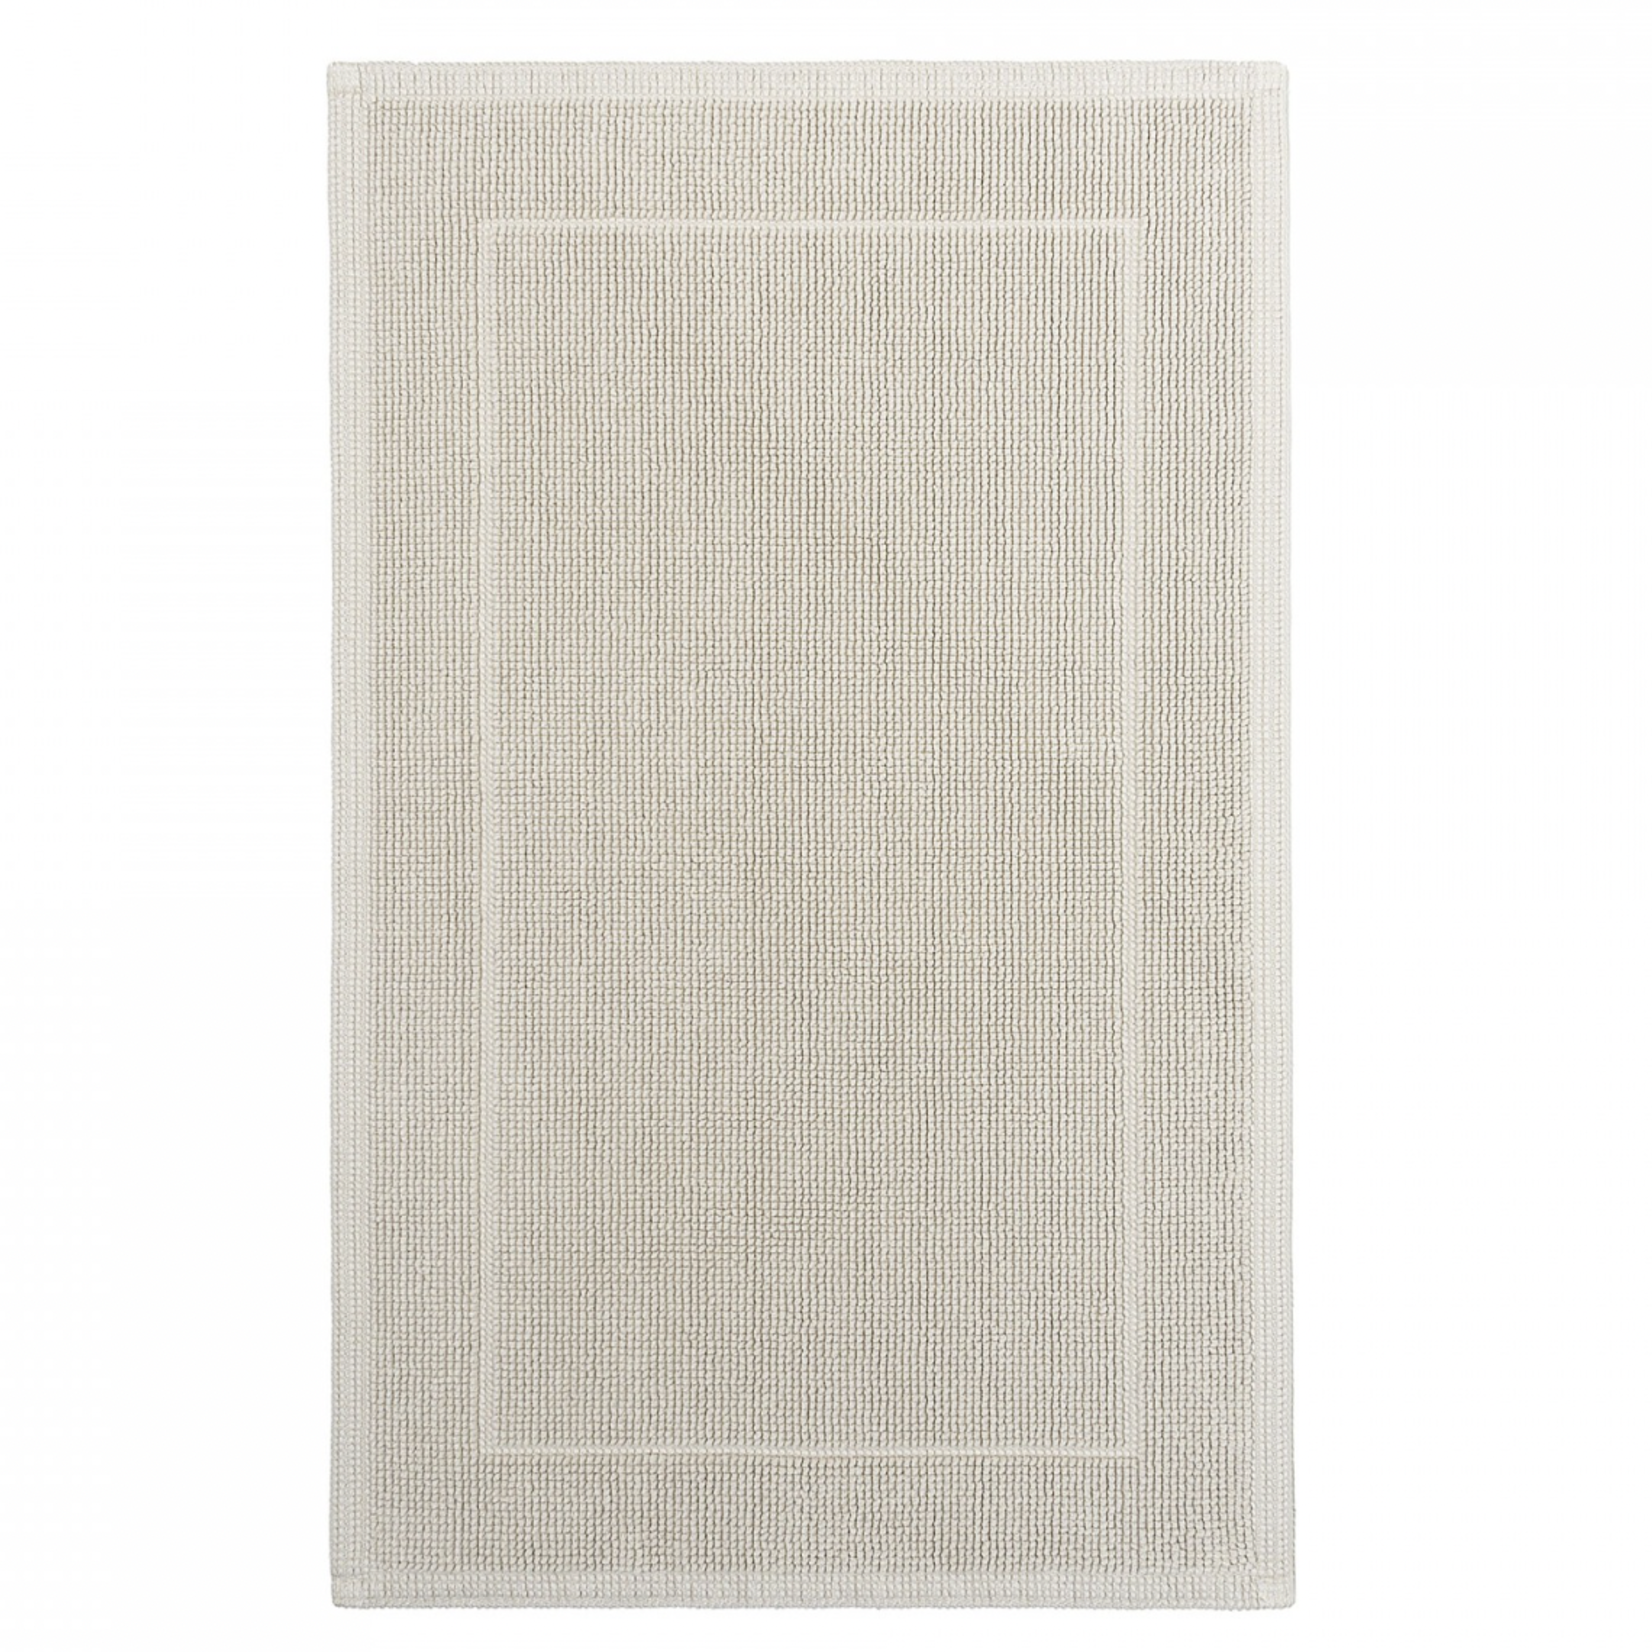 Egoist Care Towel by Graccioza Hand Towel 18x30 - White